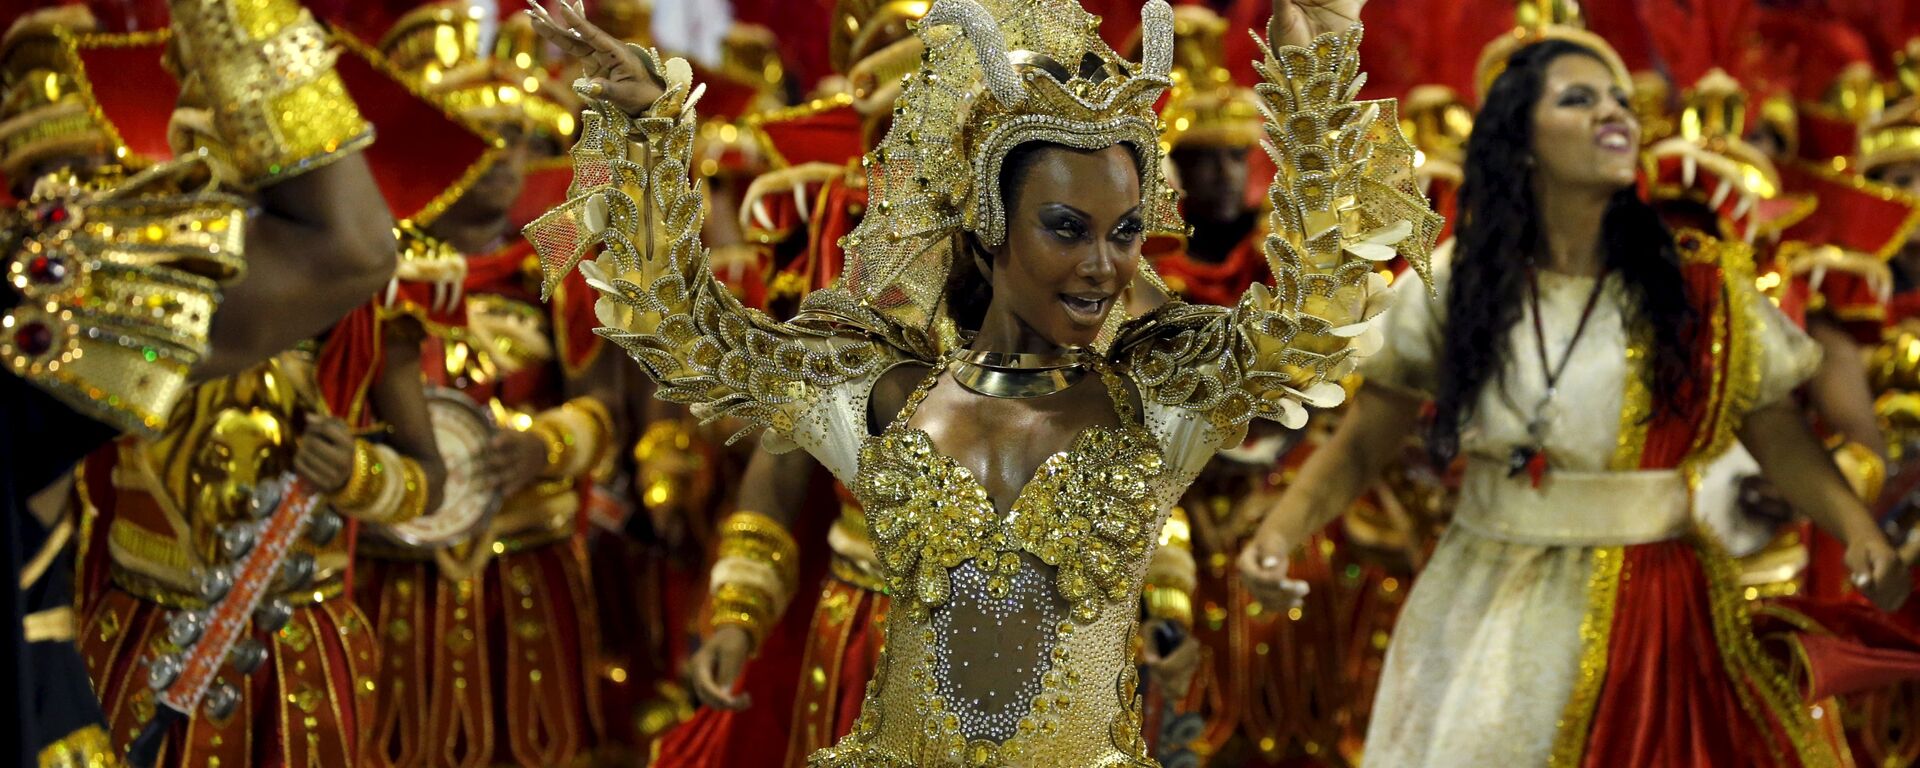 Estacio de Sa samba schooll's Drum Queen Luana Bandeira performs during the carnaval parade at the Sambadrome in Rio de Janeiro's Sambadrome February 7, 2016. - Sputnik Mundo, 1920, 07.01.2022